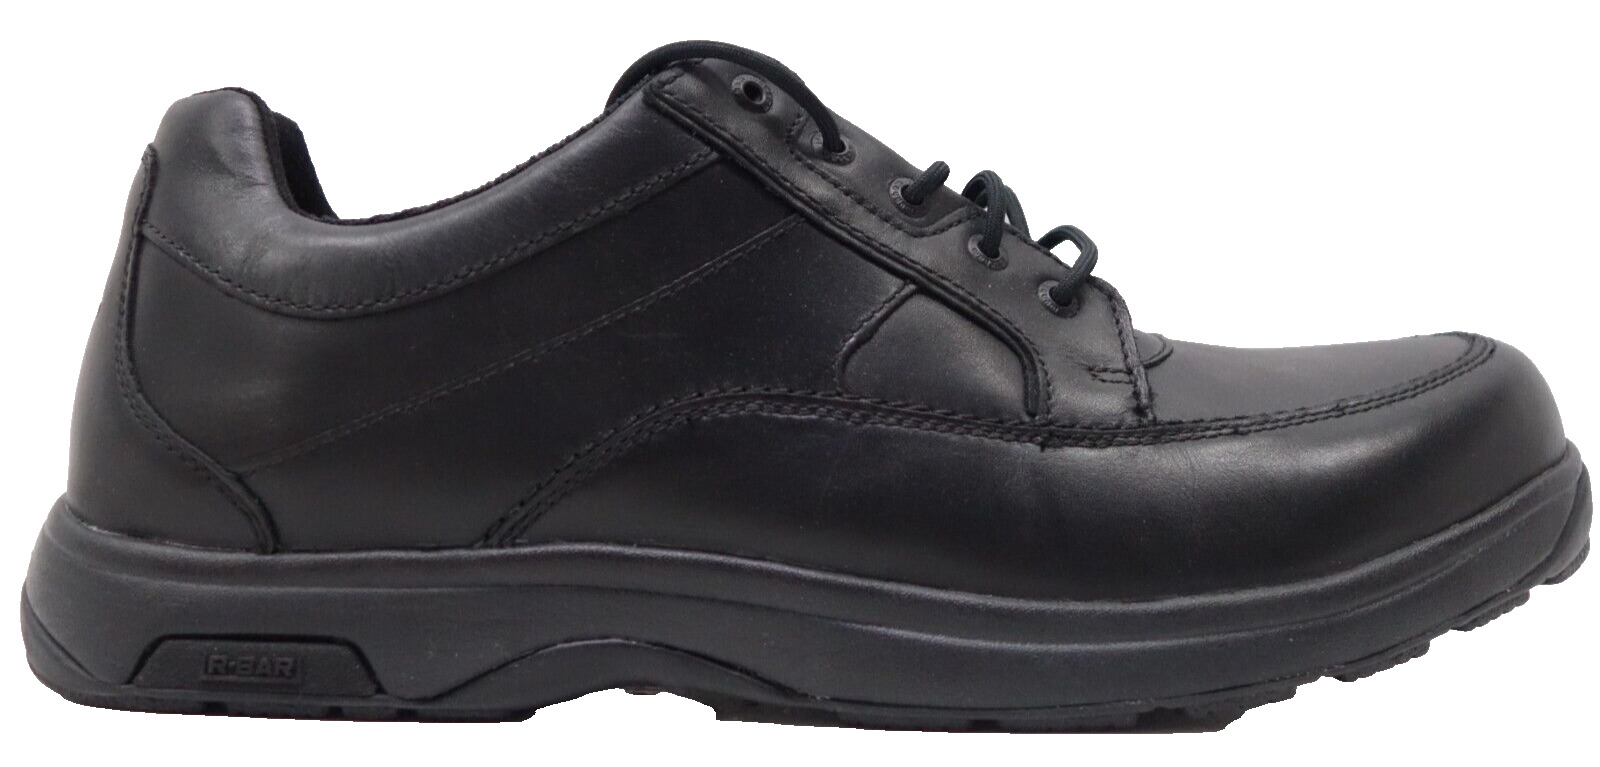 Dunham Mens Black Midland Service Slip Resistant Outdoor Shoes Sz US 15 D EU 50